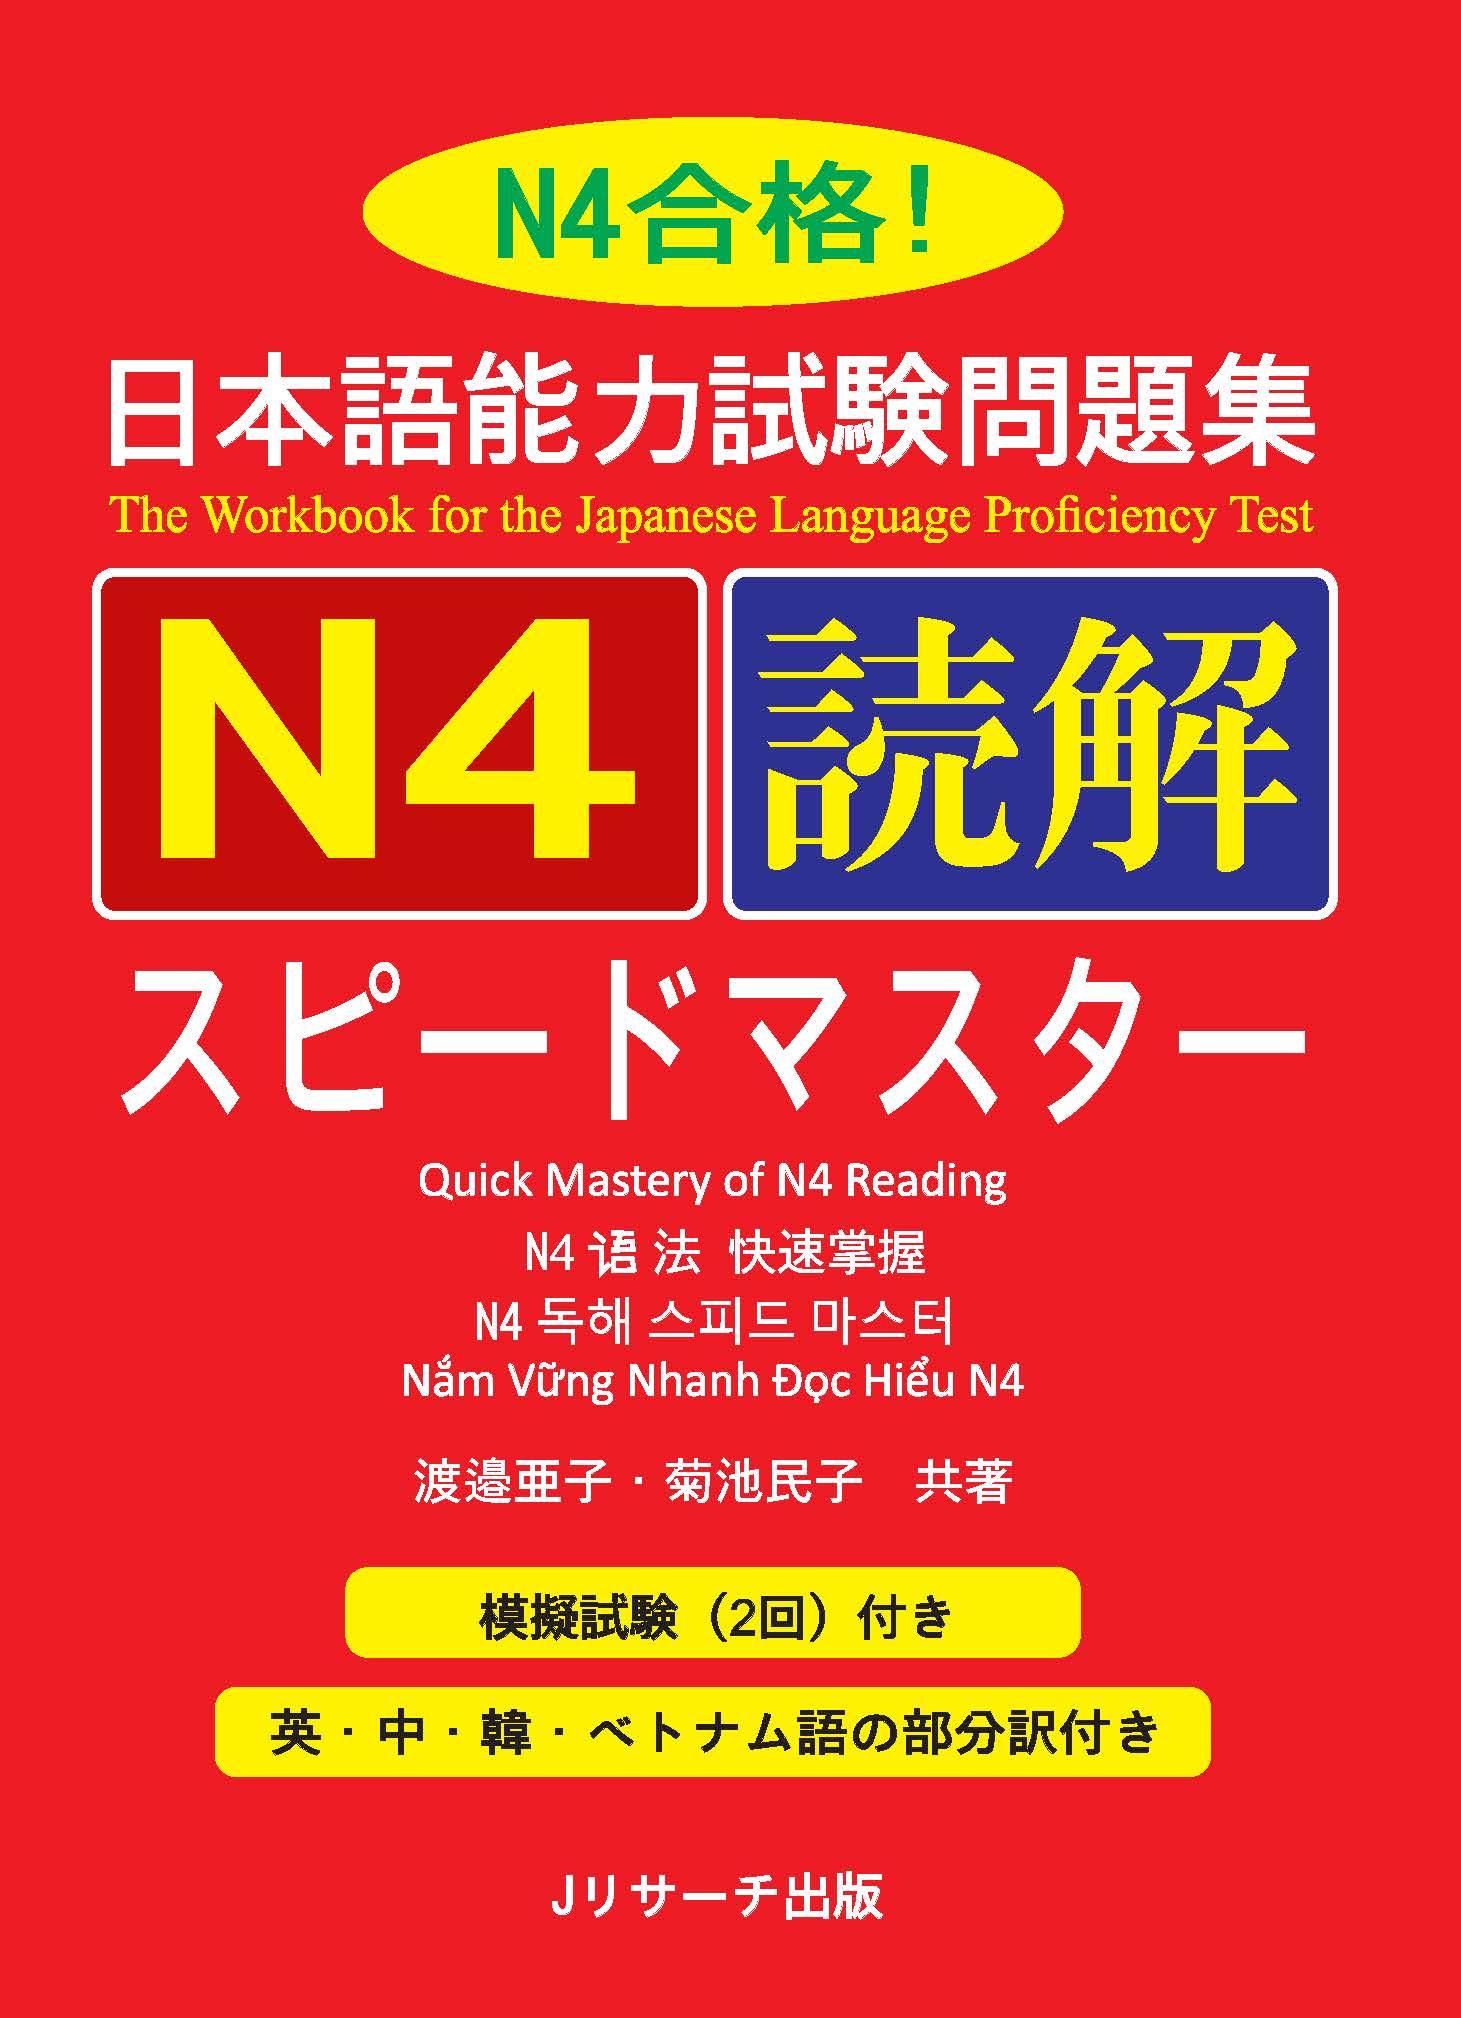 Giáo Trình Speed Master N4 – Phần Đọc Hiểu DOKKAI | 日本語能力試験問題集 N4読解スピードマスター